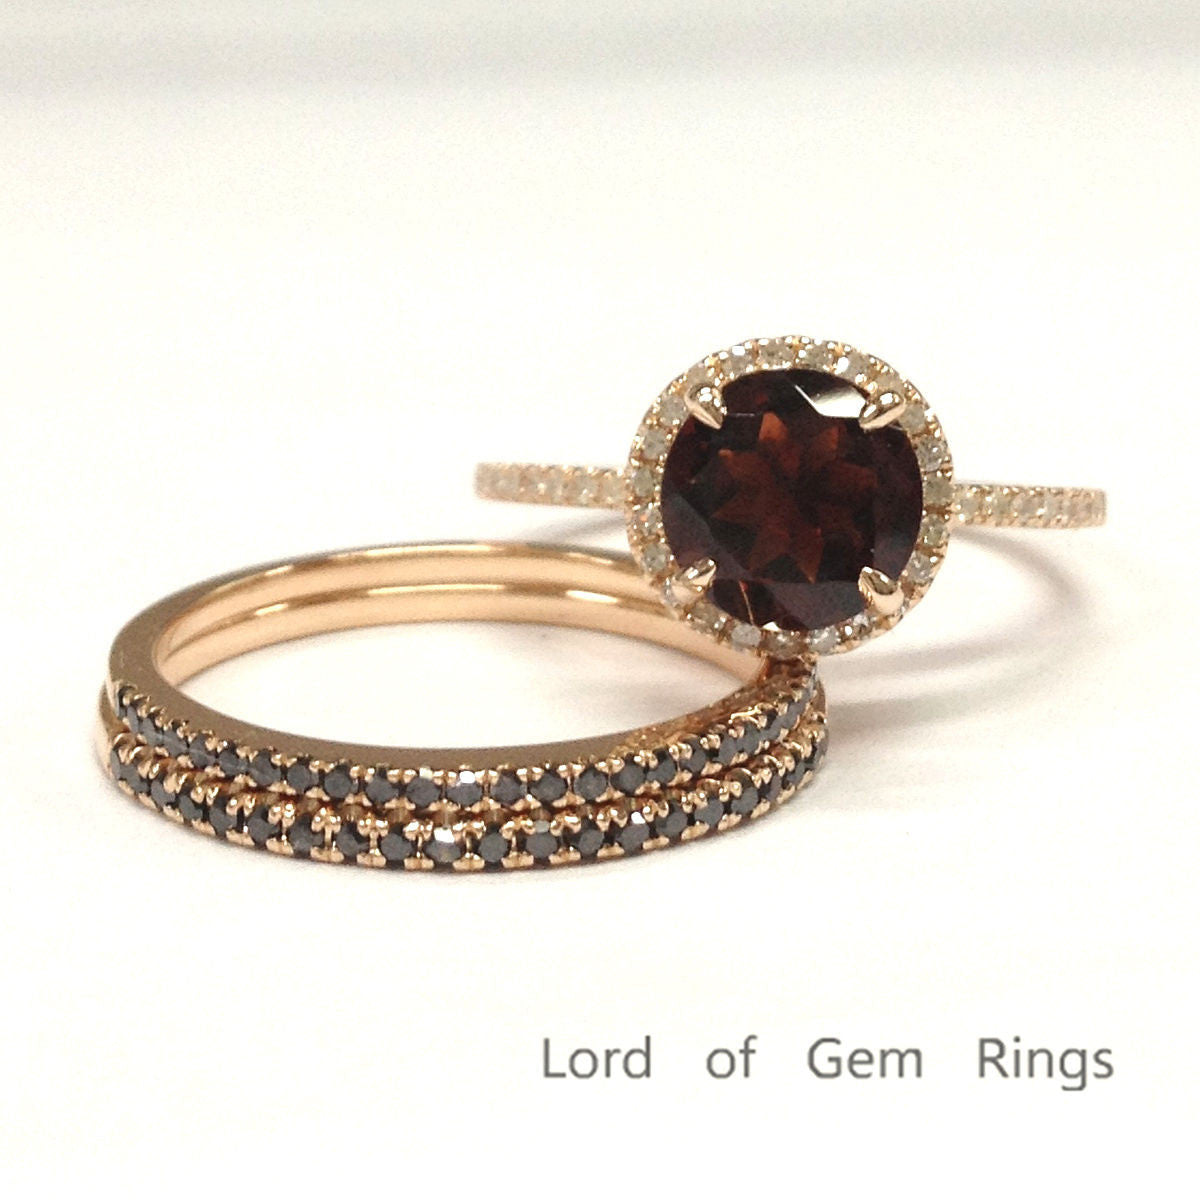 Round Garnet Engagement Ring Sets Pave Black Diamond Wedding Bands 14K Rose Gold 7mm - Lord of Gem Rings - 1